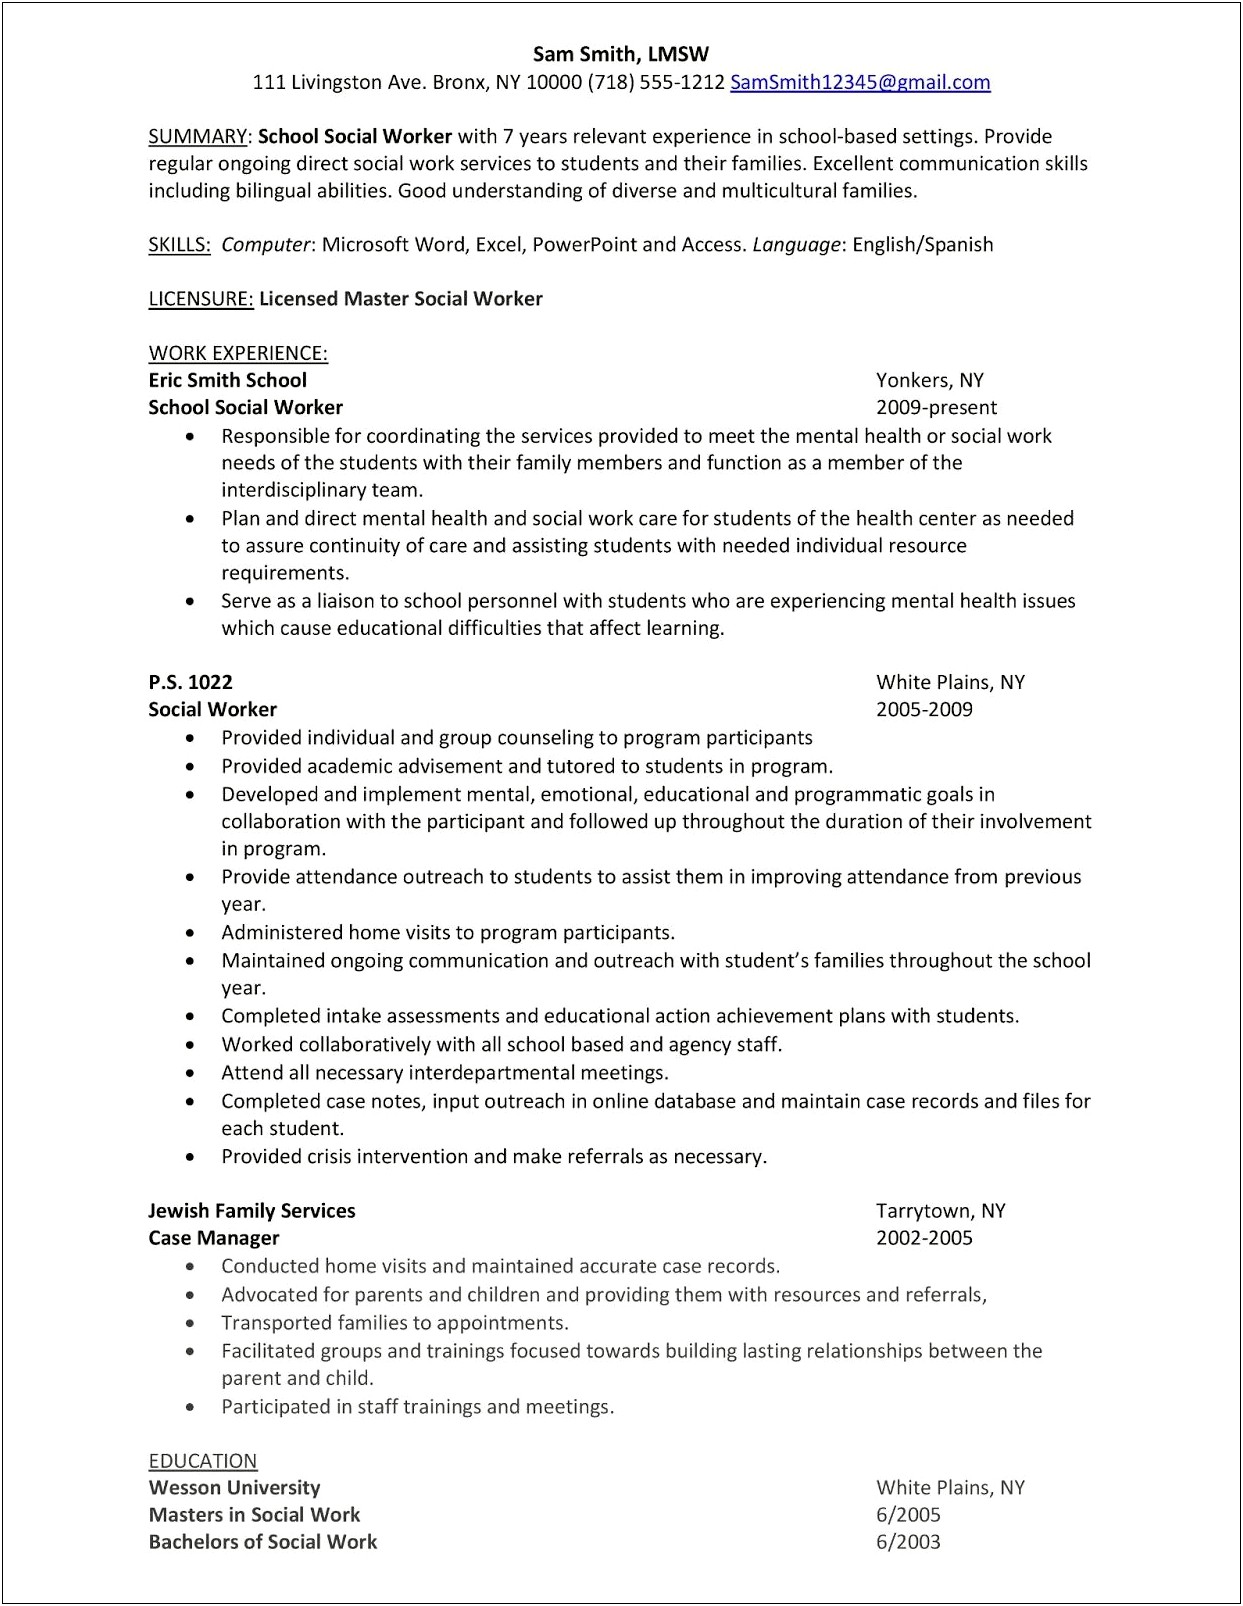 Sample Resume For Hospital Case Manager